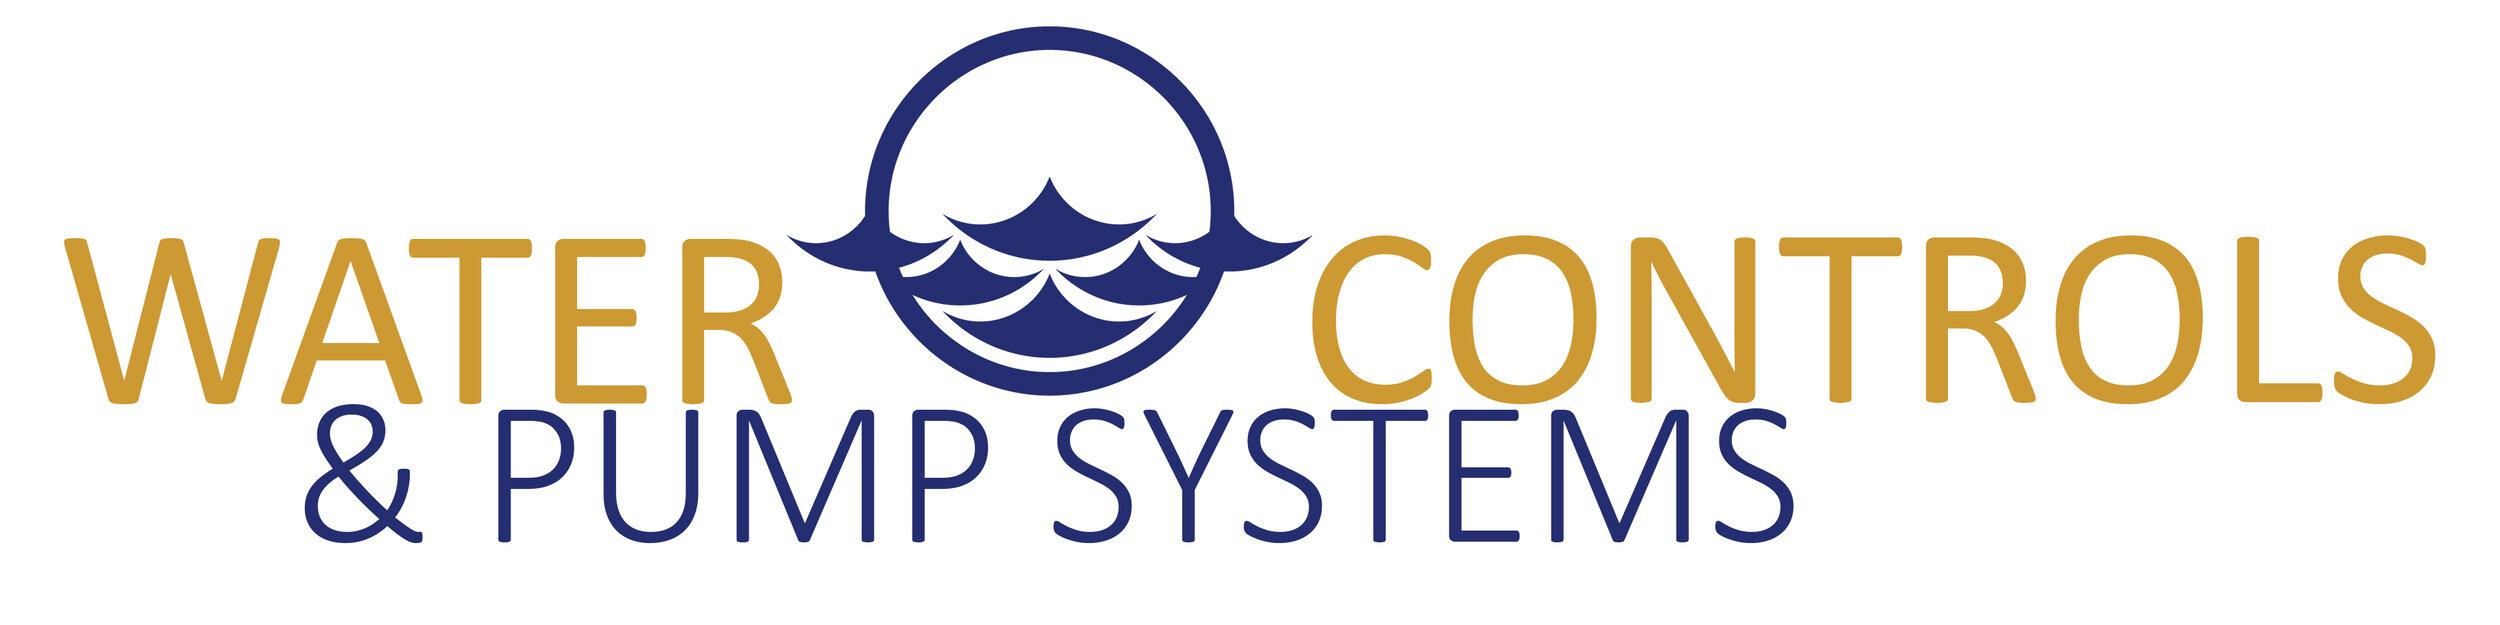 WATER CONTROLS & PUMP SYSTEMS - LOGO - CALIBRI 90 & 72 - BLUE 21426f - GOLD c29132.jpg